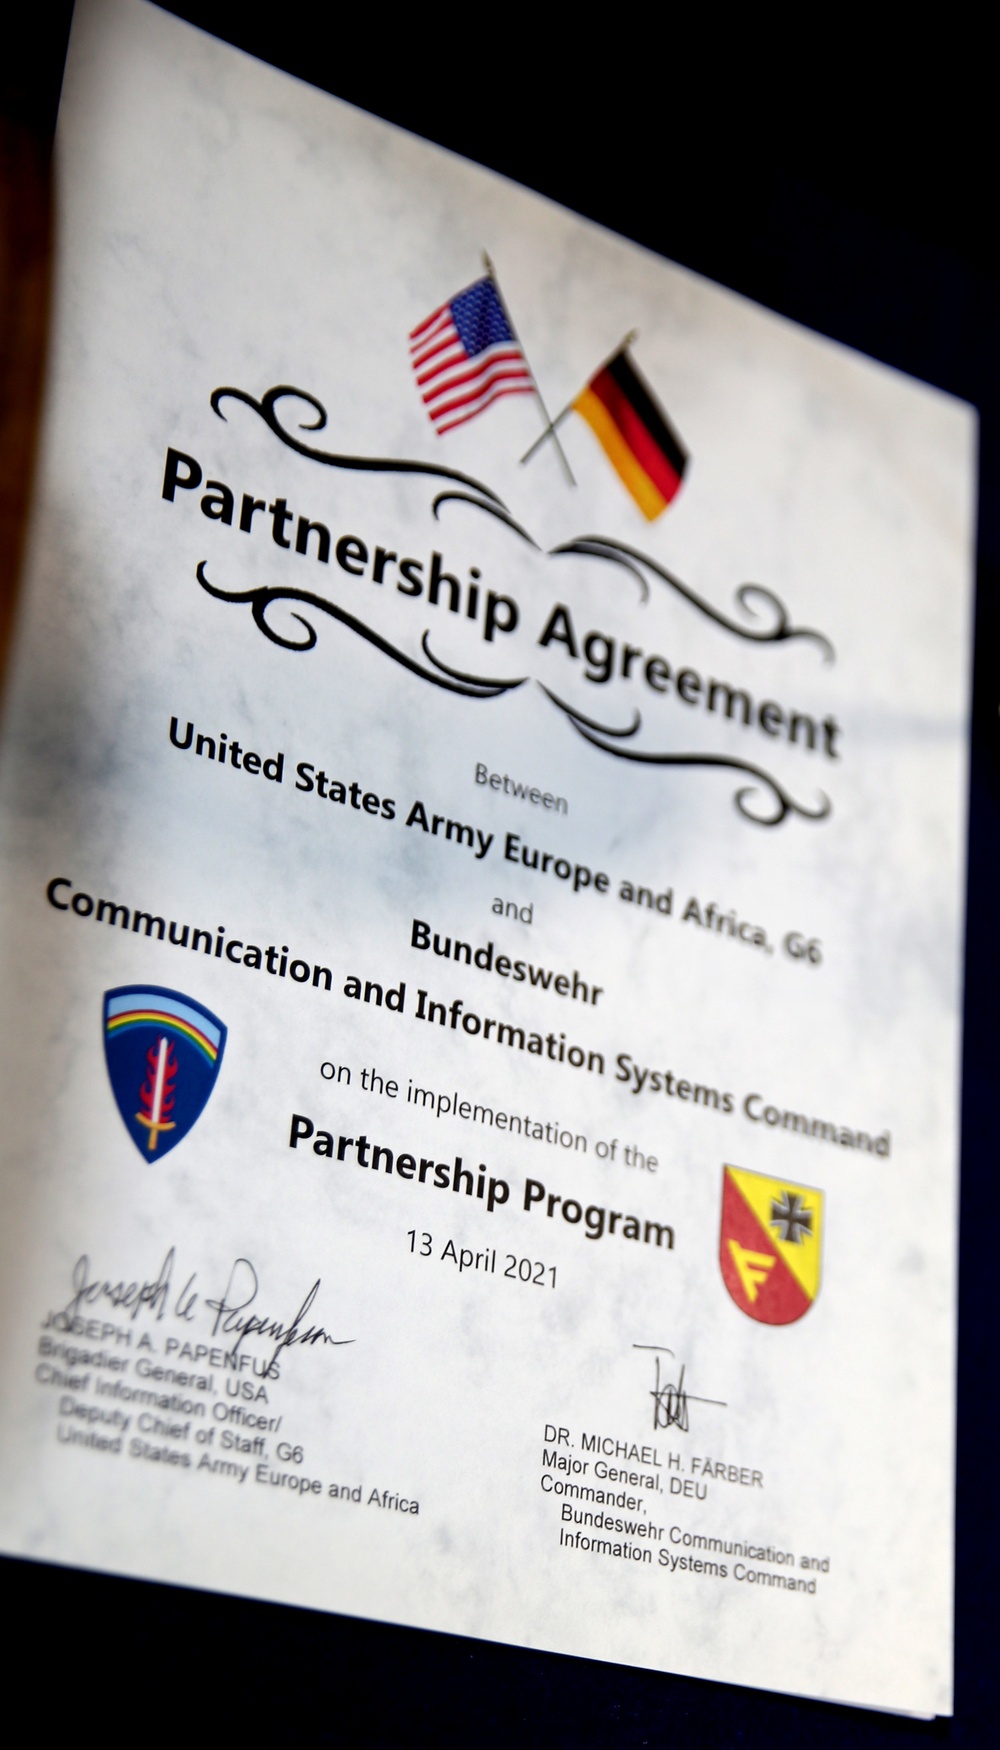 USAREUR-AF &amp; BwCISCOM Partnership Agreement Signing